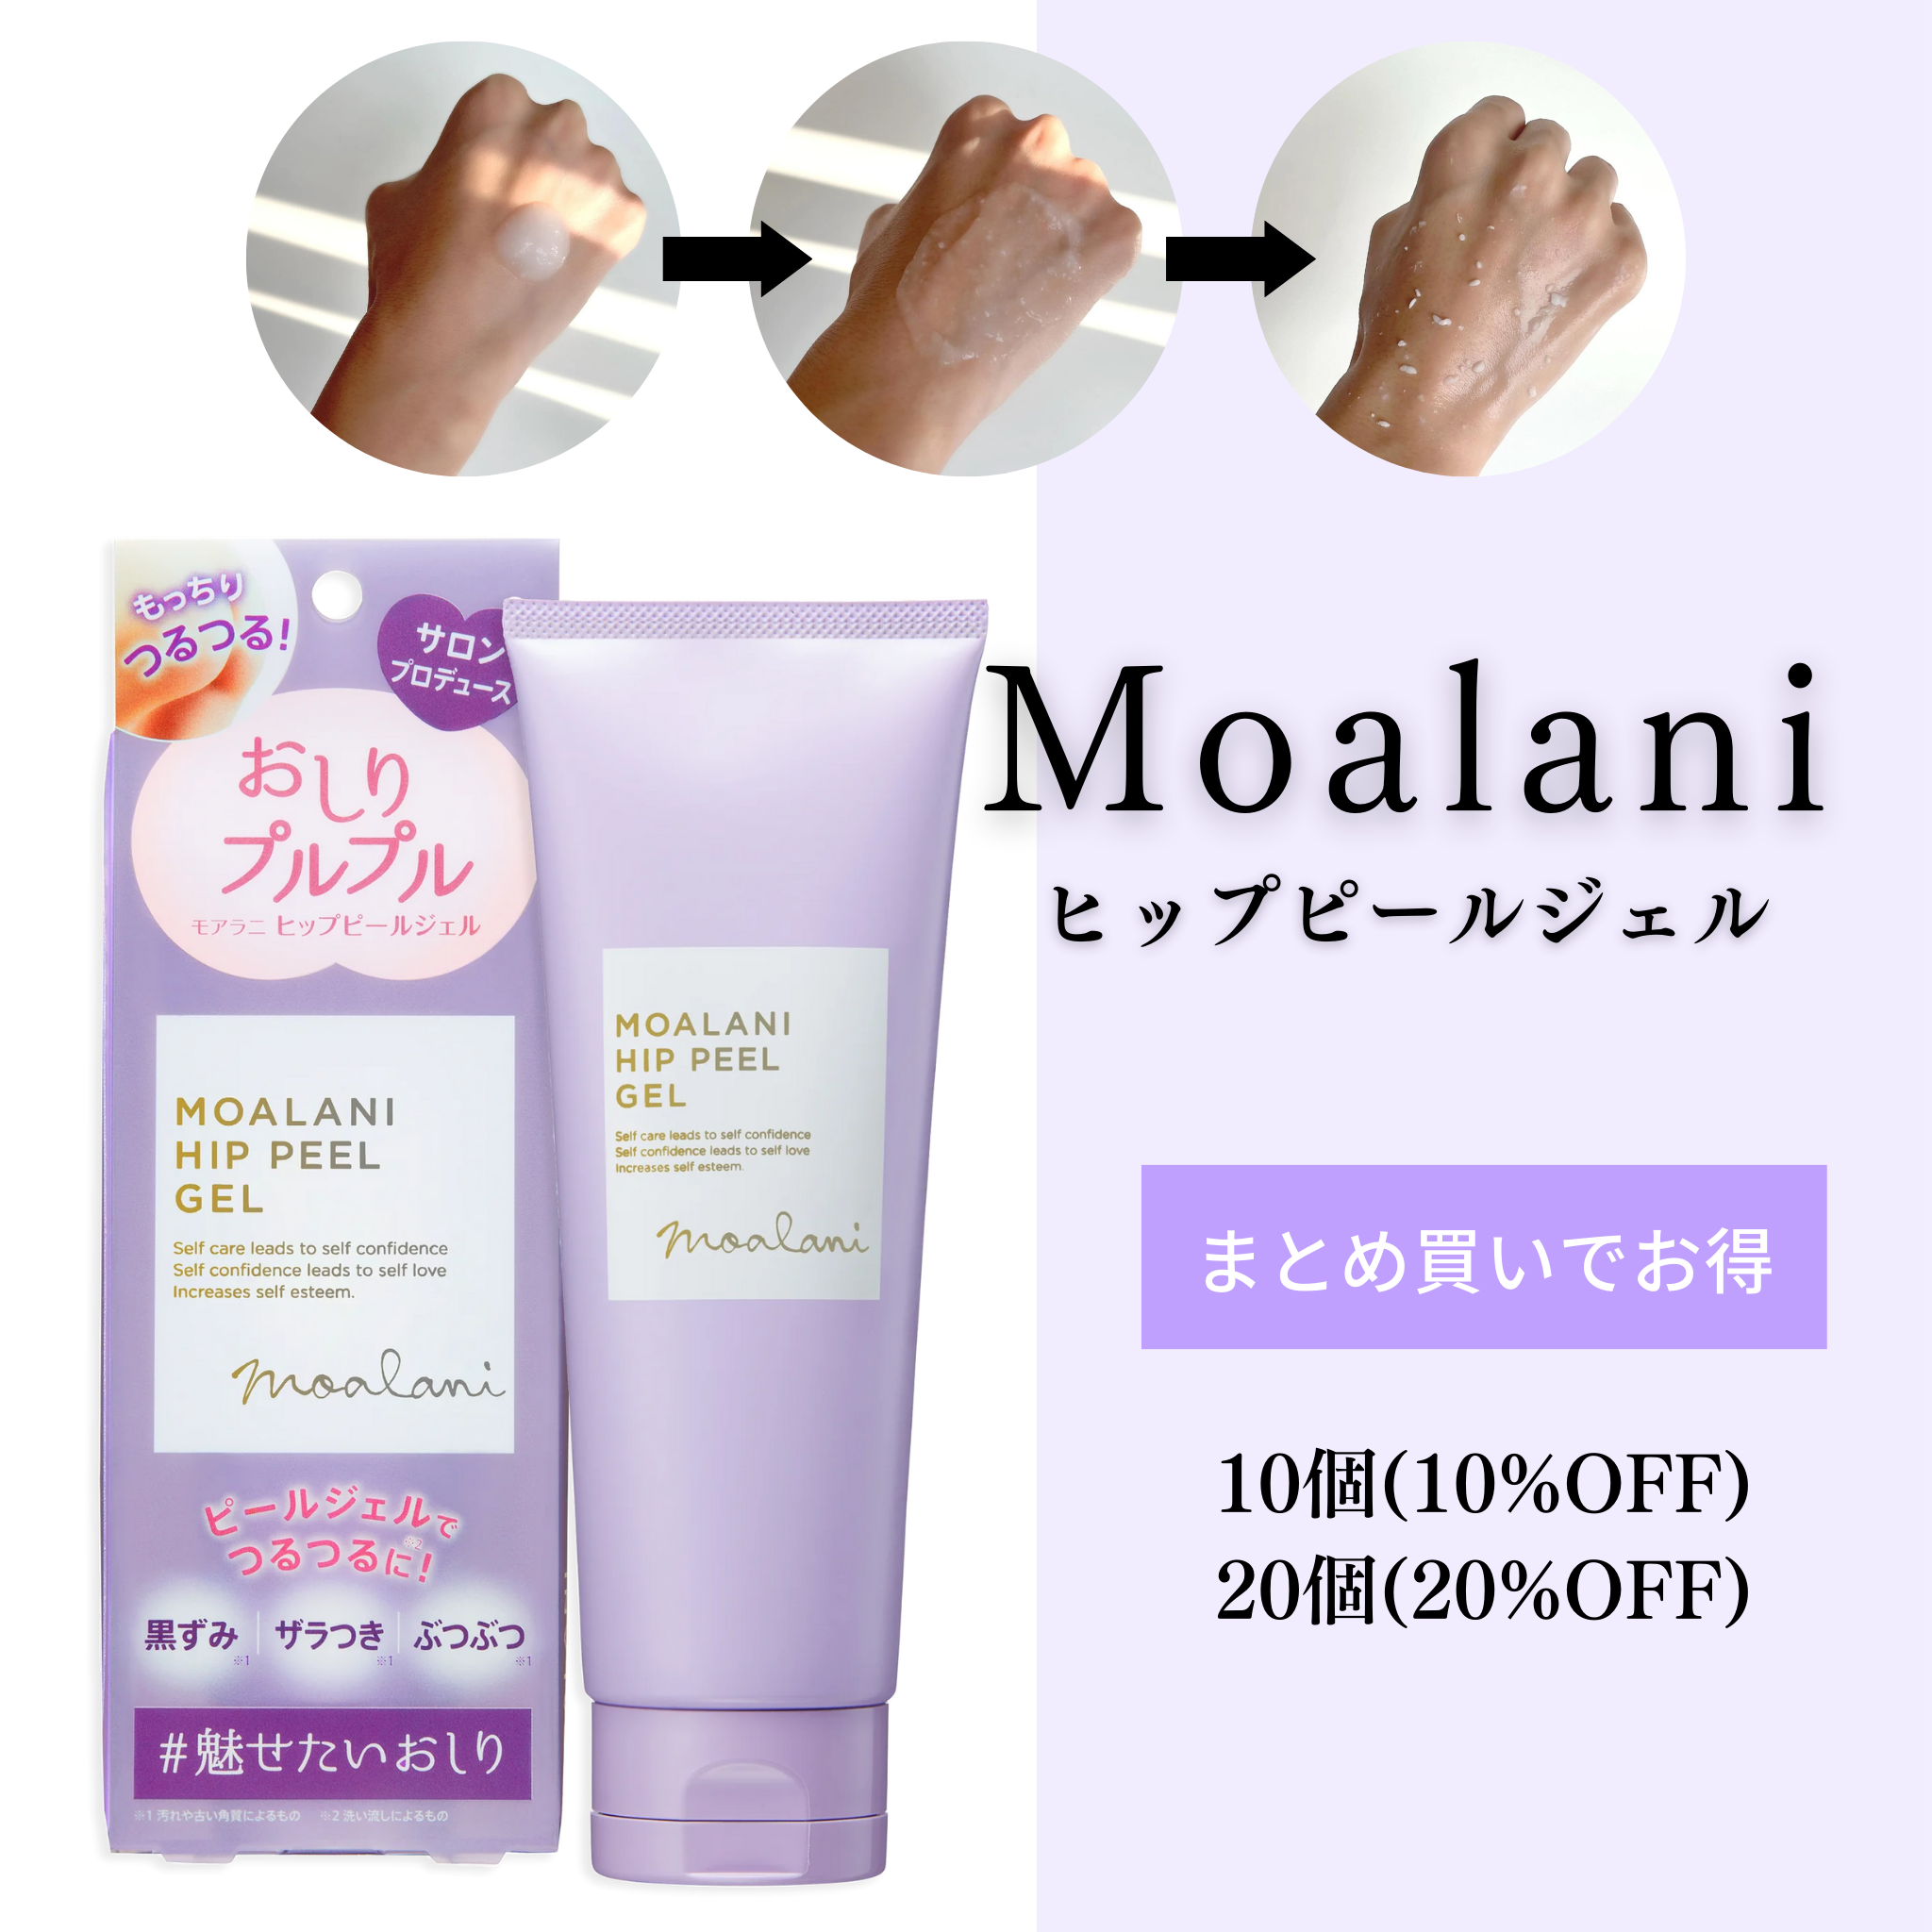 Moalani ヒップピール ジェル – IWC Shop